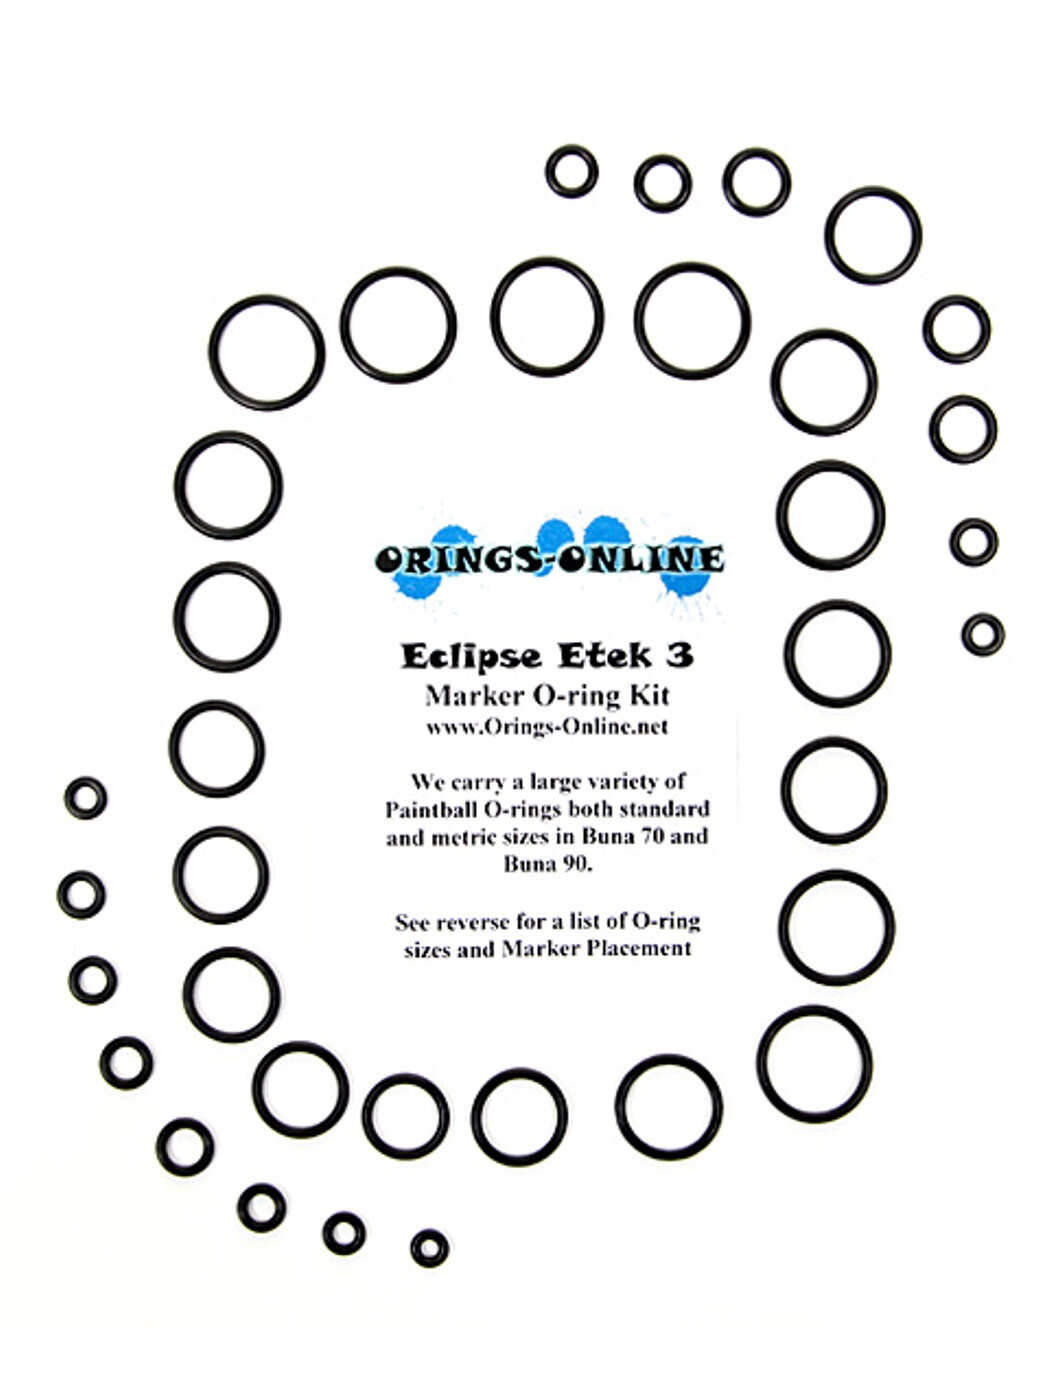 Planet Eclipse Etek 3 Marker O-ring Kit